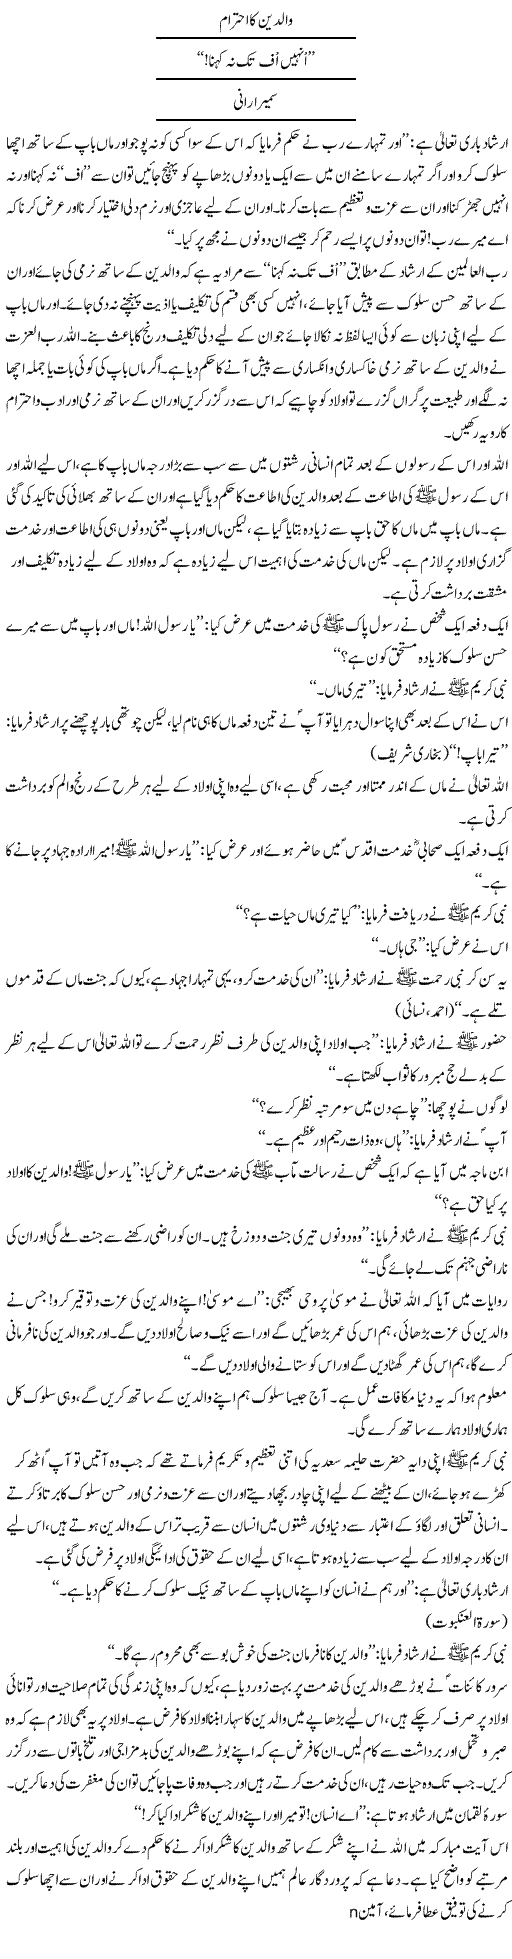 essay in urdu waldain ka ehtram